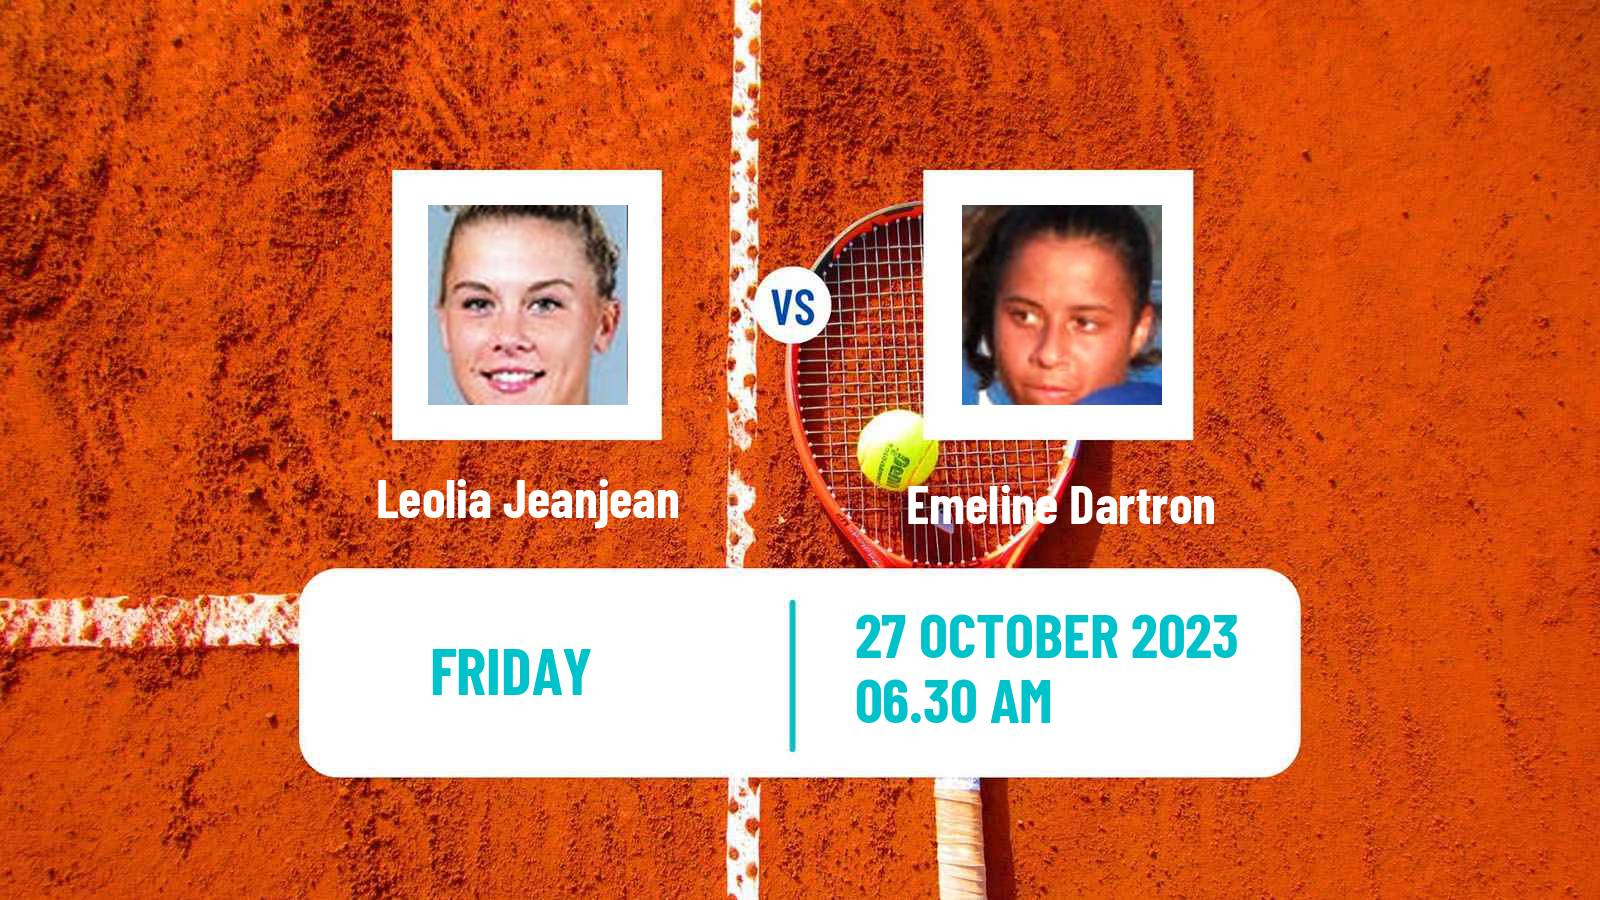 Tennis ITF W80 Poitiers Women Leolia Jeanjean - Emeline Dartron